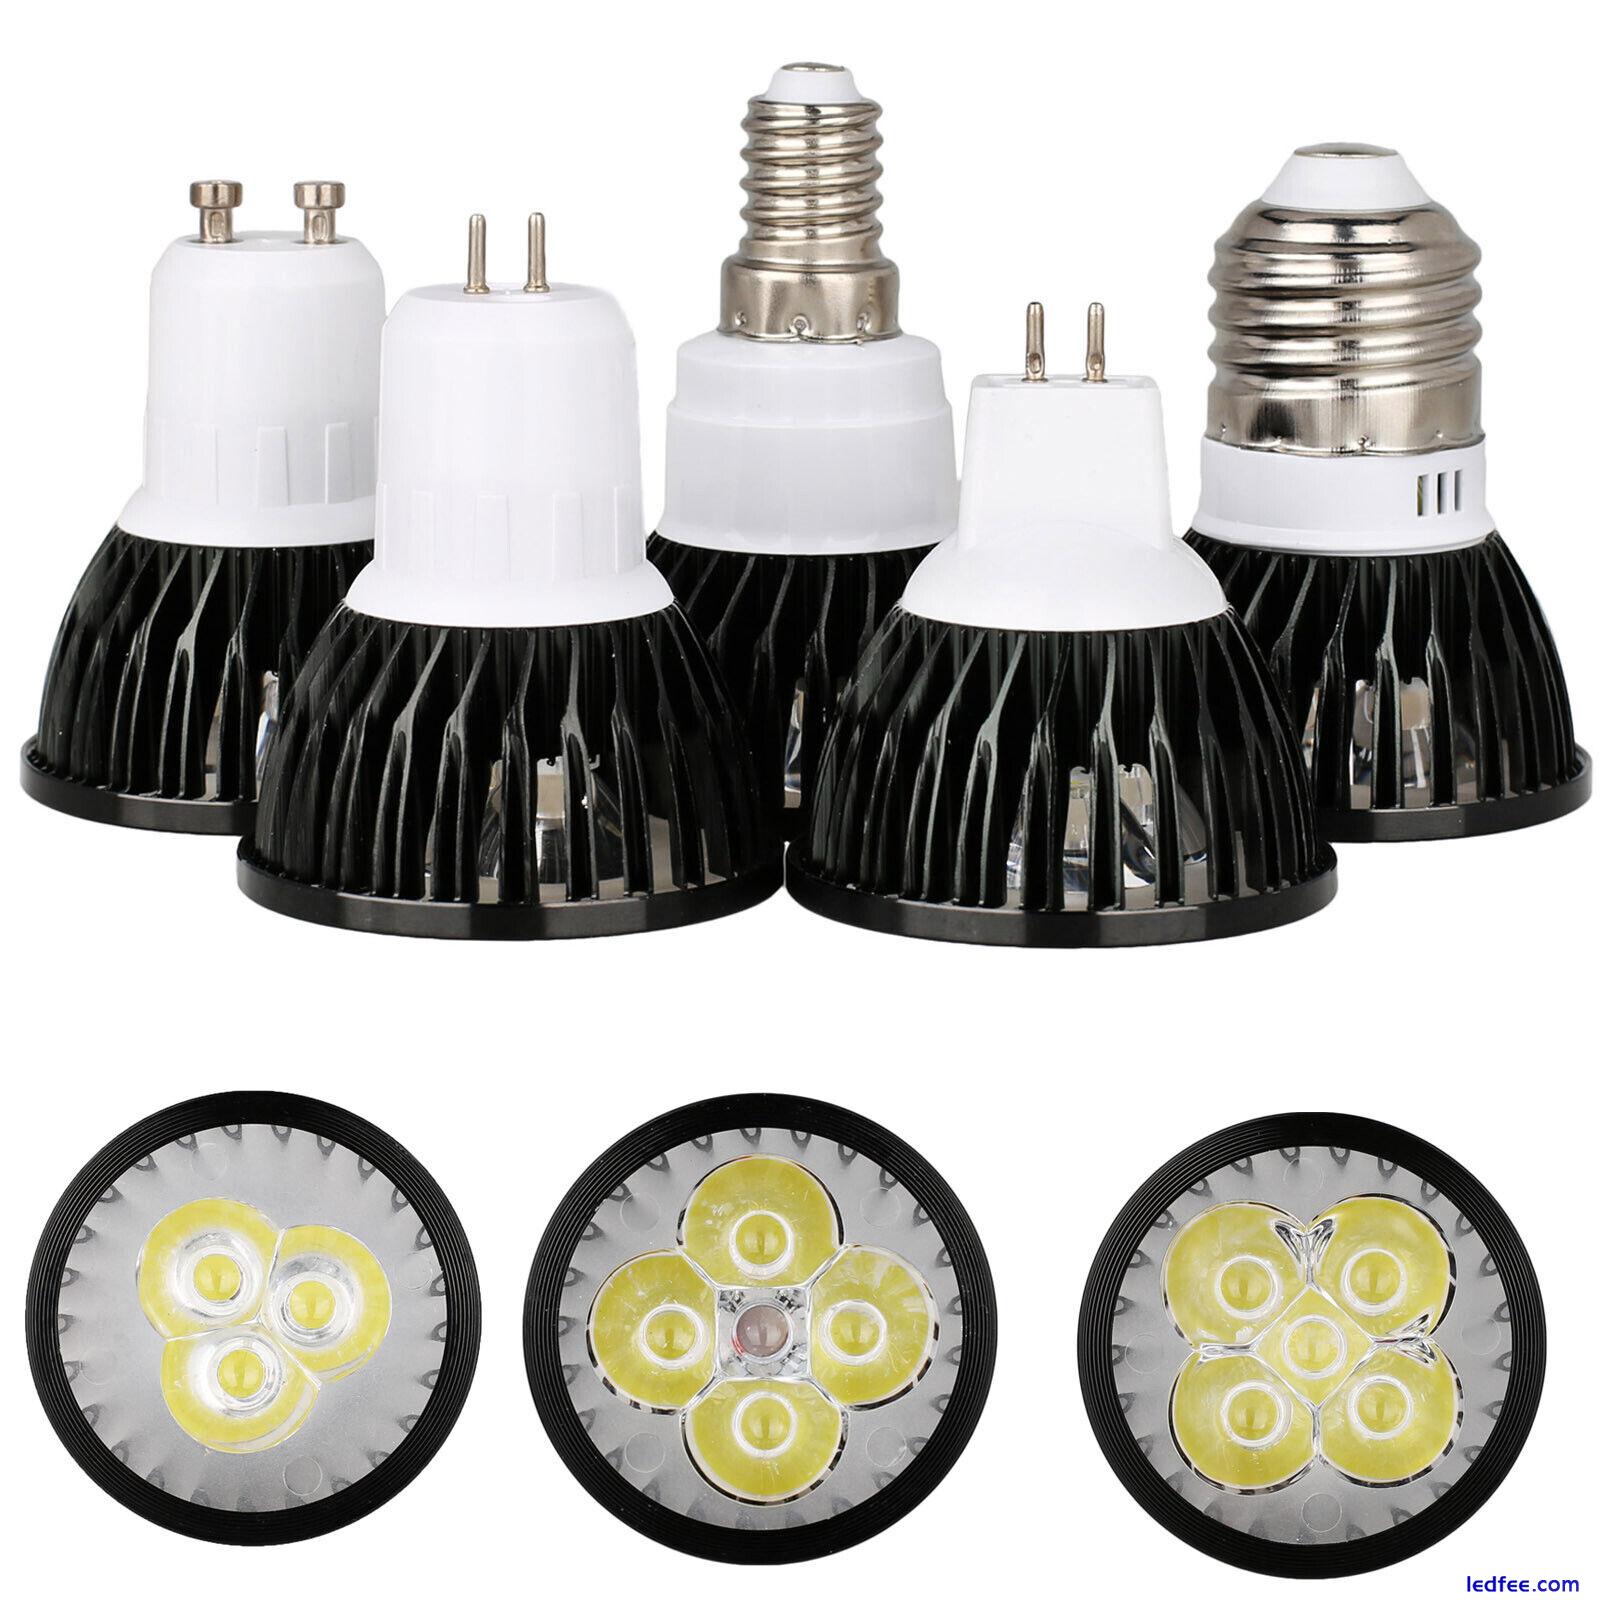 Dimmable E27 LED SpotLight Bulbs GU10 MR16 E14 GU5.3 9W 12W 15W Lamp 220V 12V BC 0 